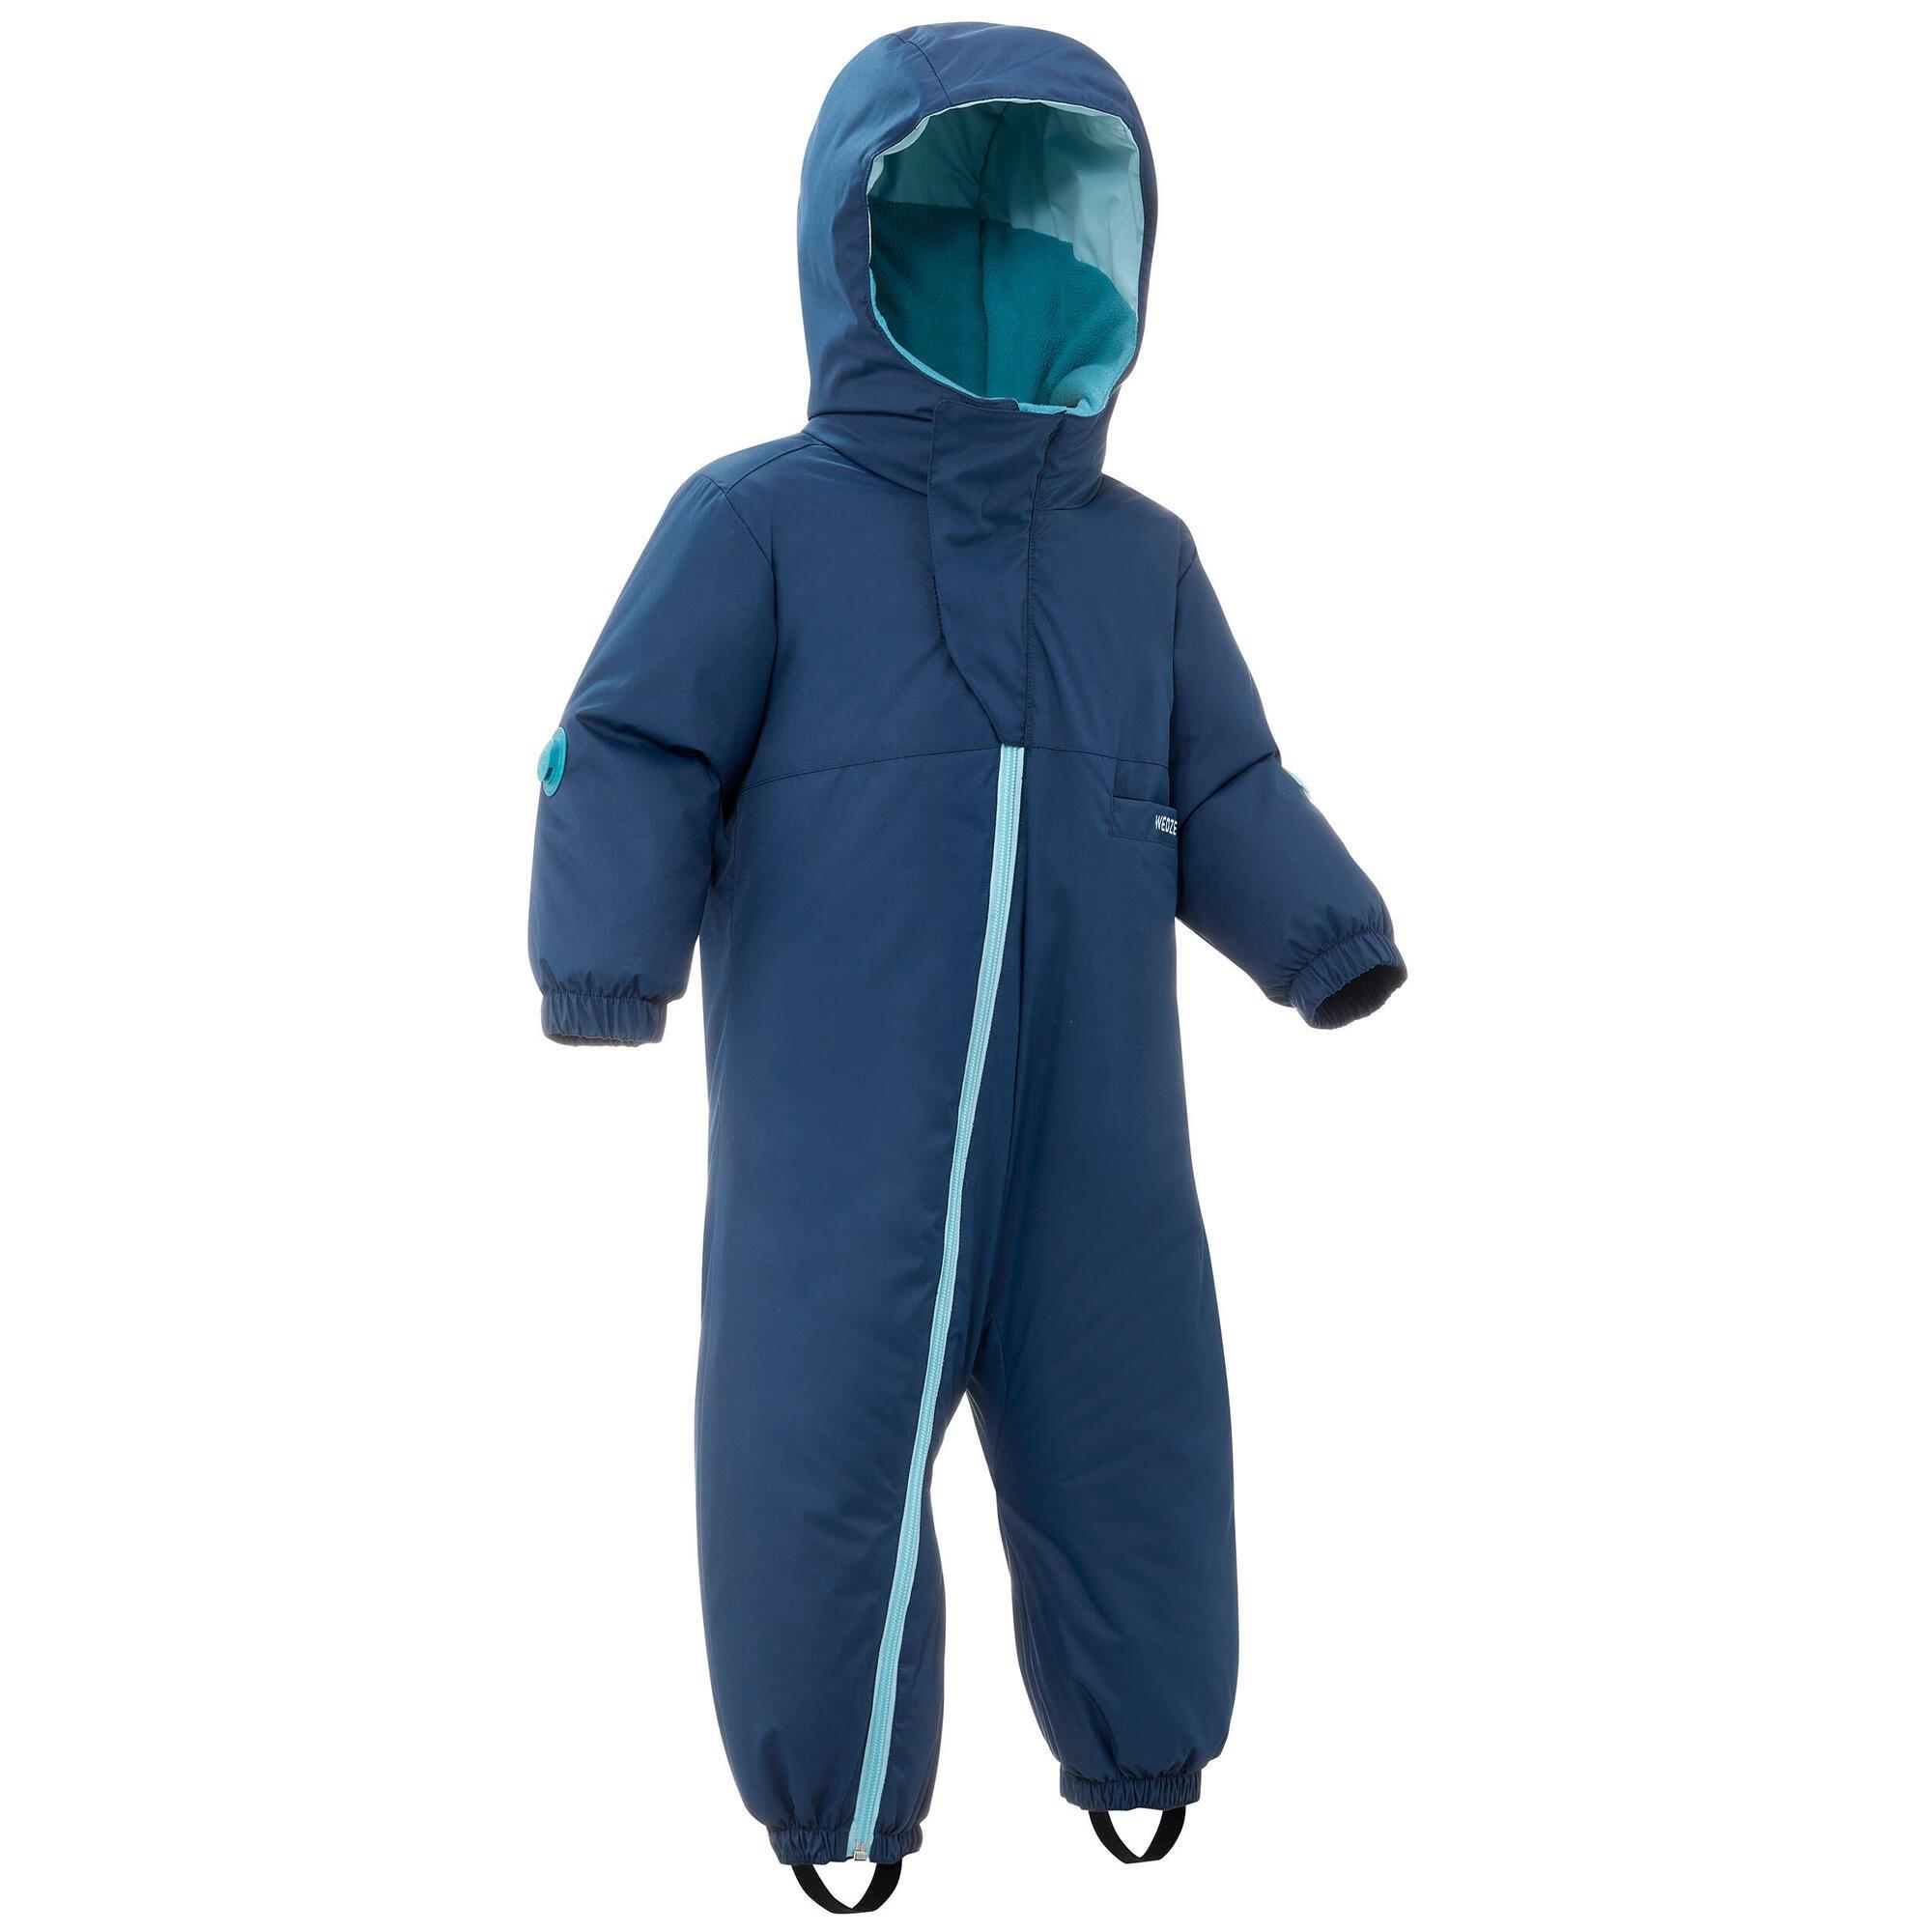 Decathlon Warm Ski Suit - 500 Warm Lugiklip